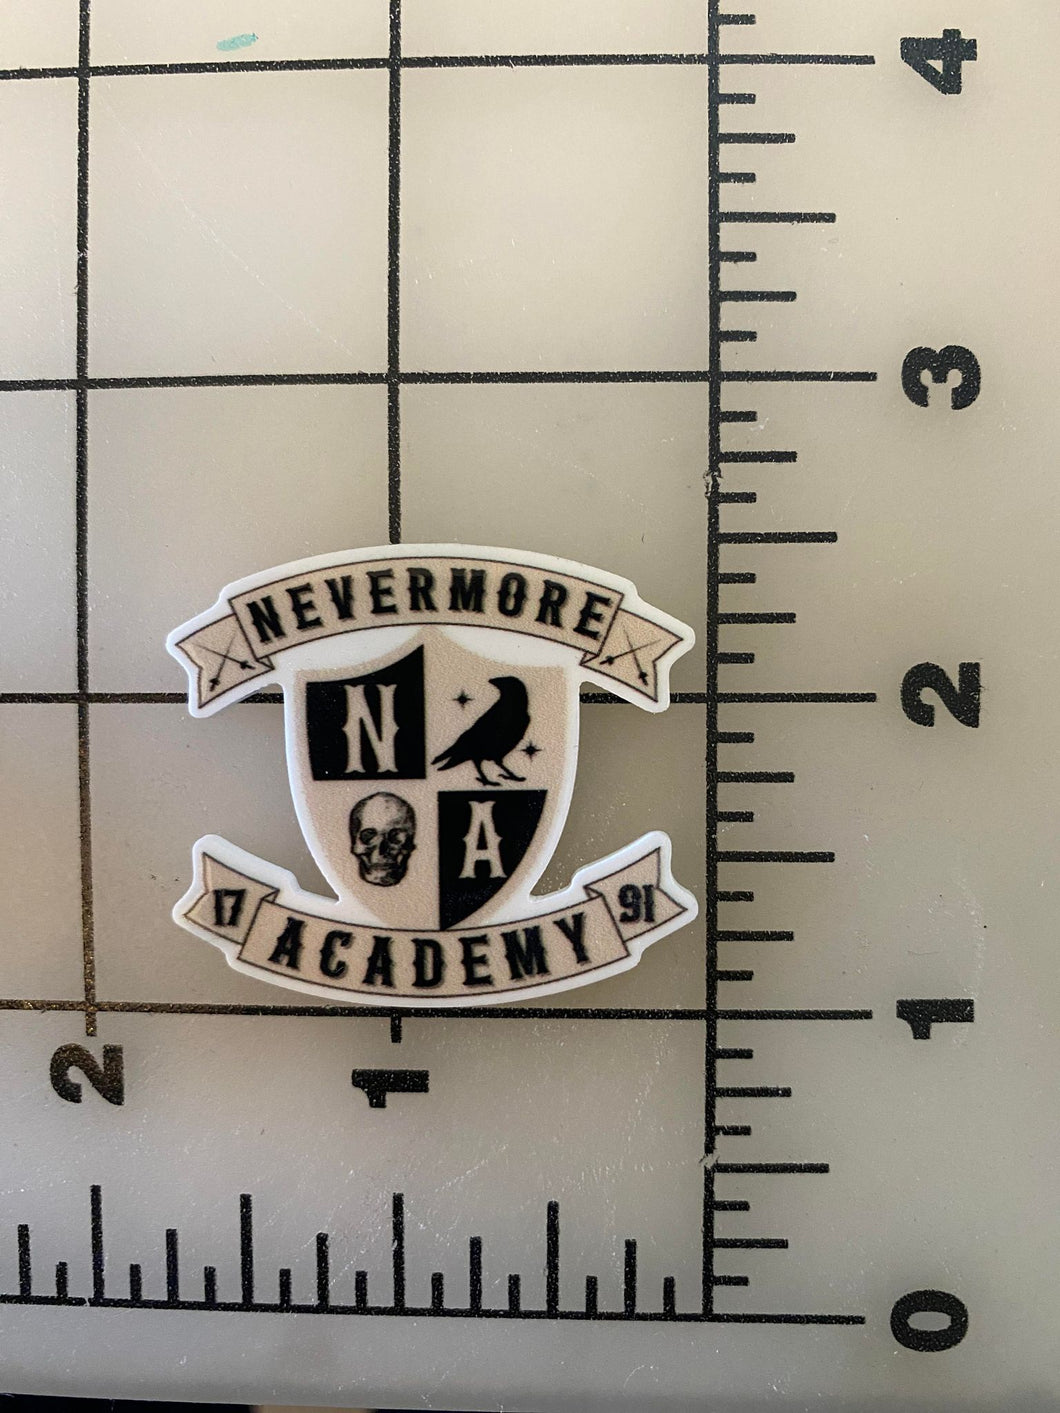 Nevermore Academy 